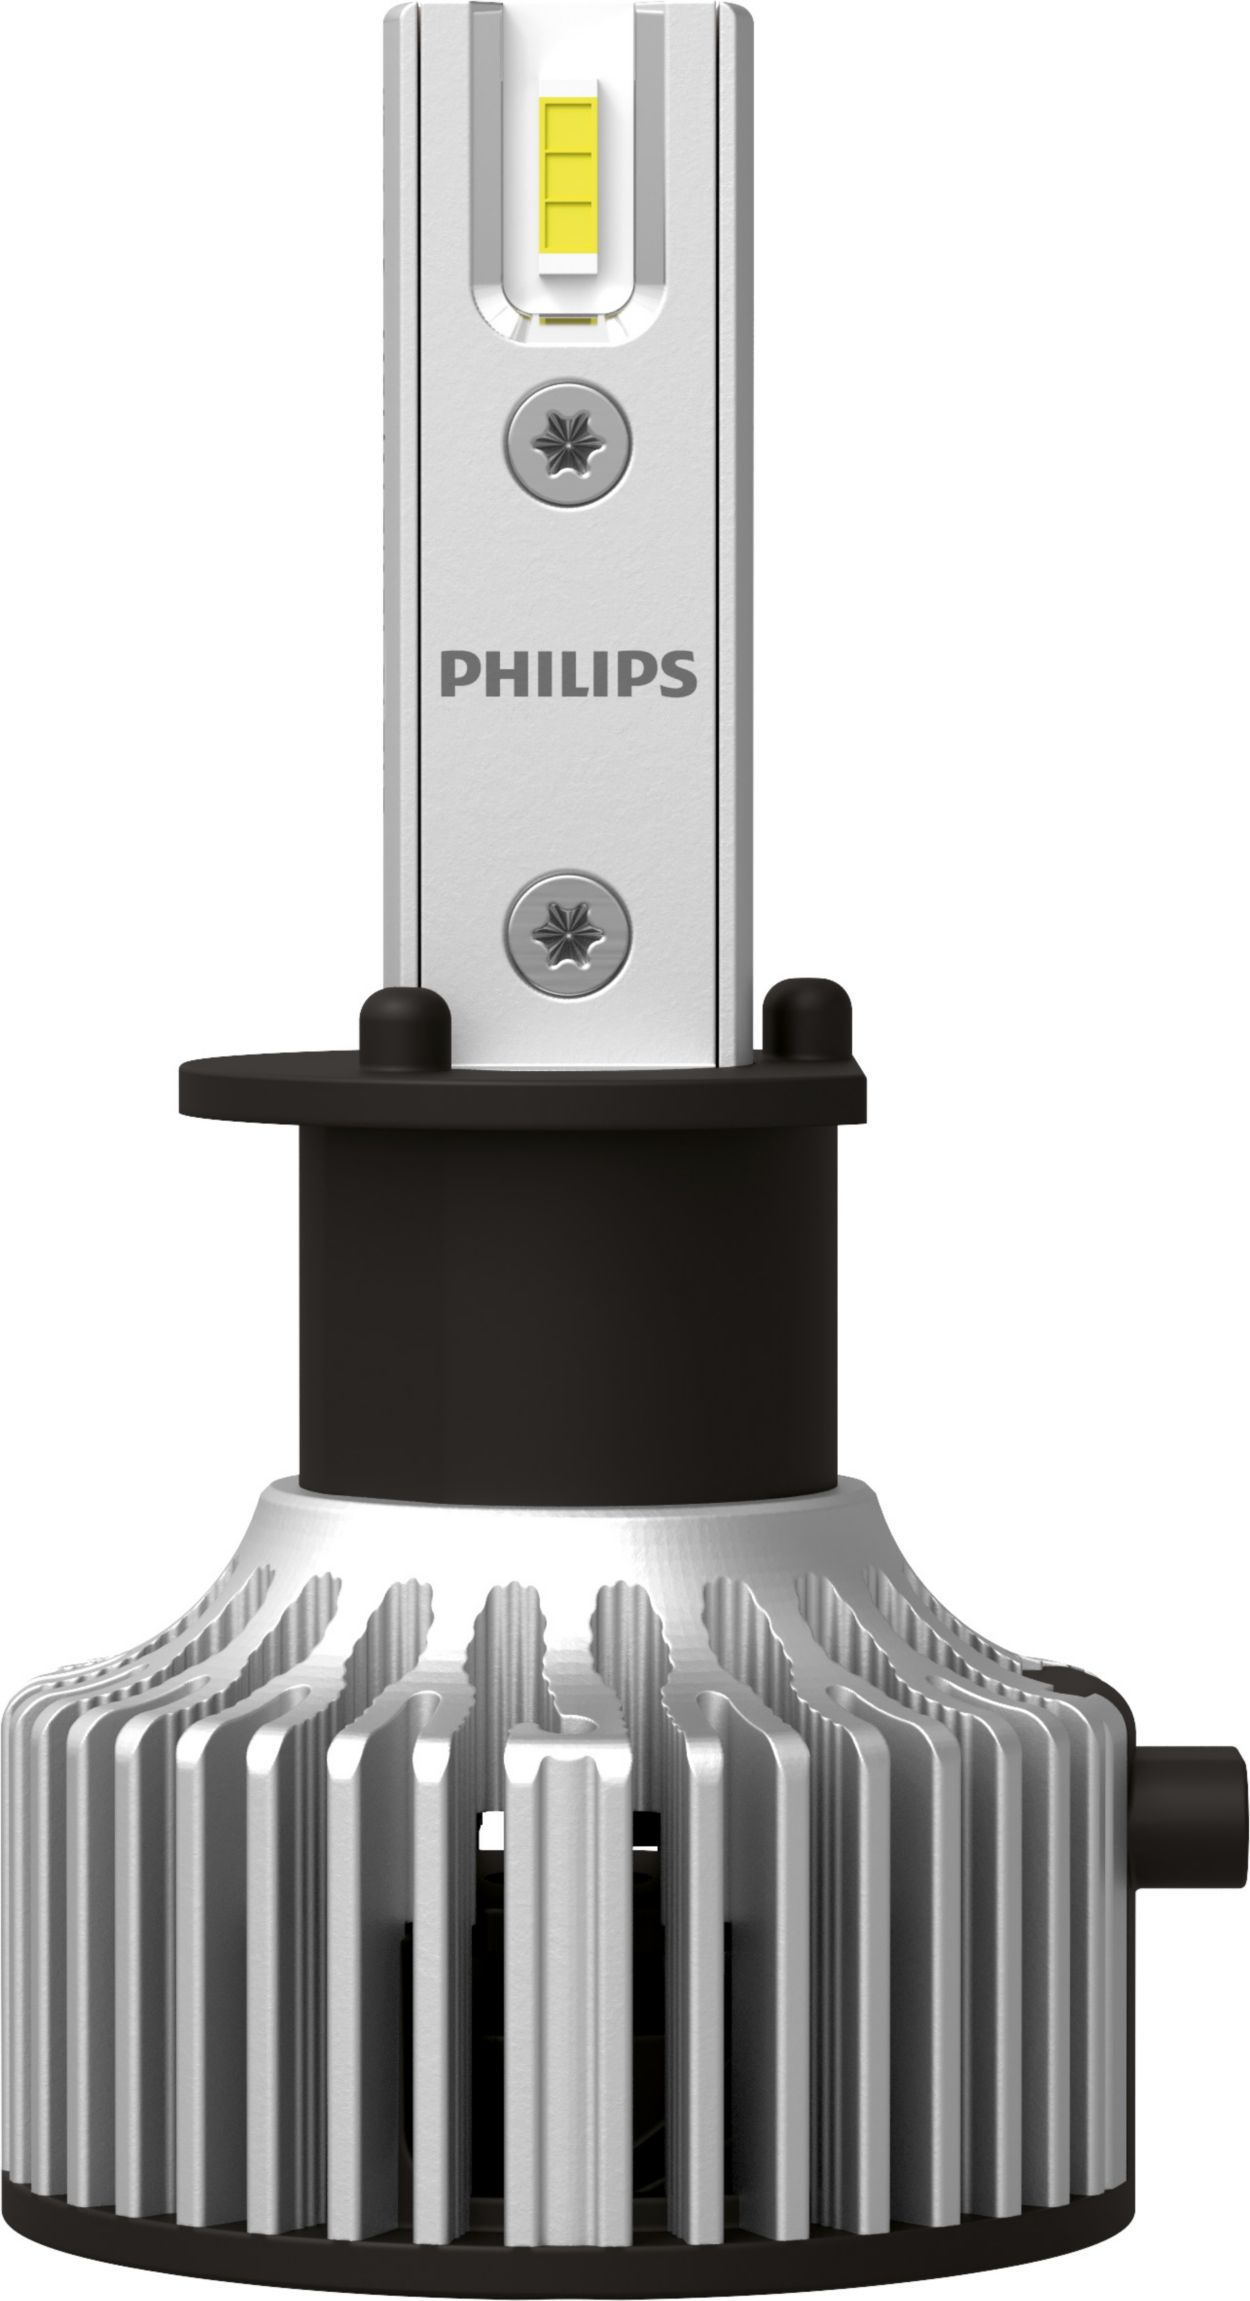 Philips Philips Ultinon Pro3021 LED Car Headligh…